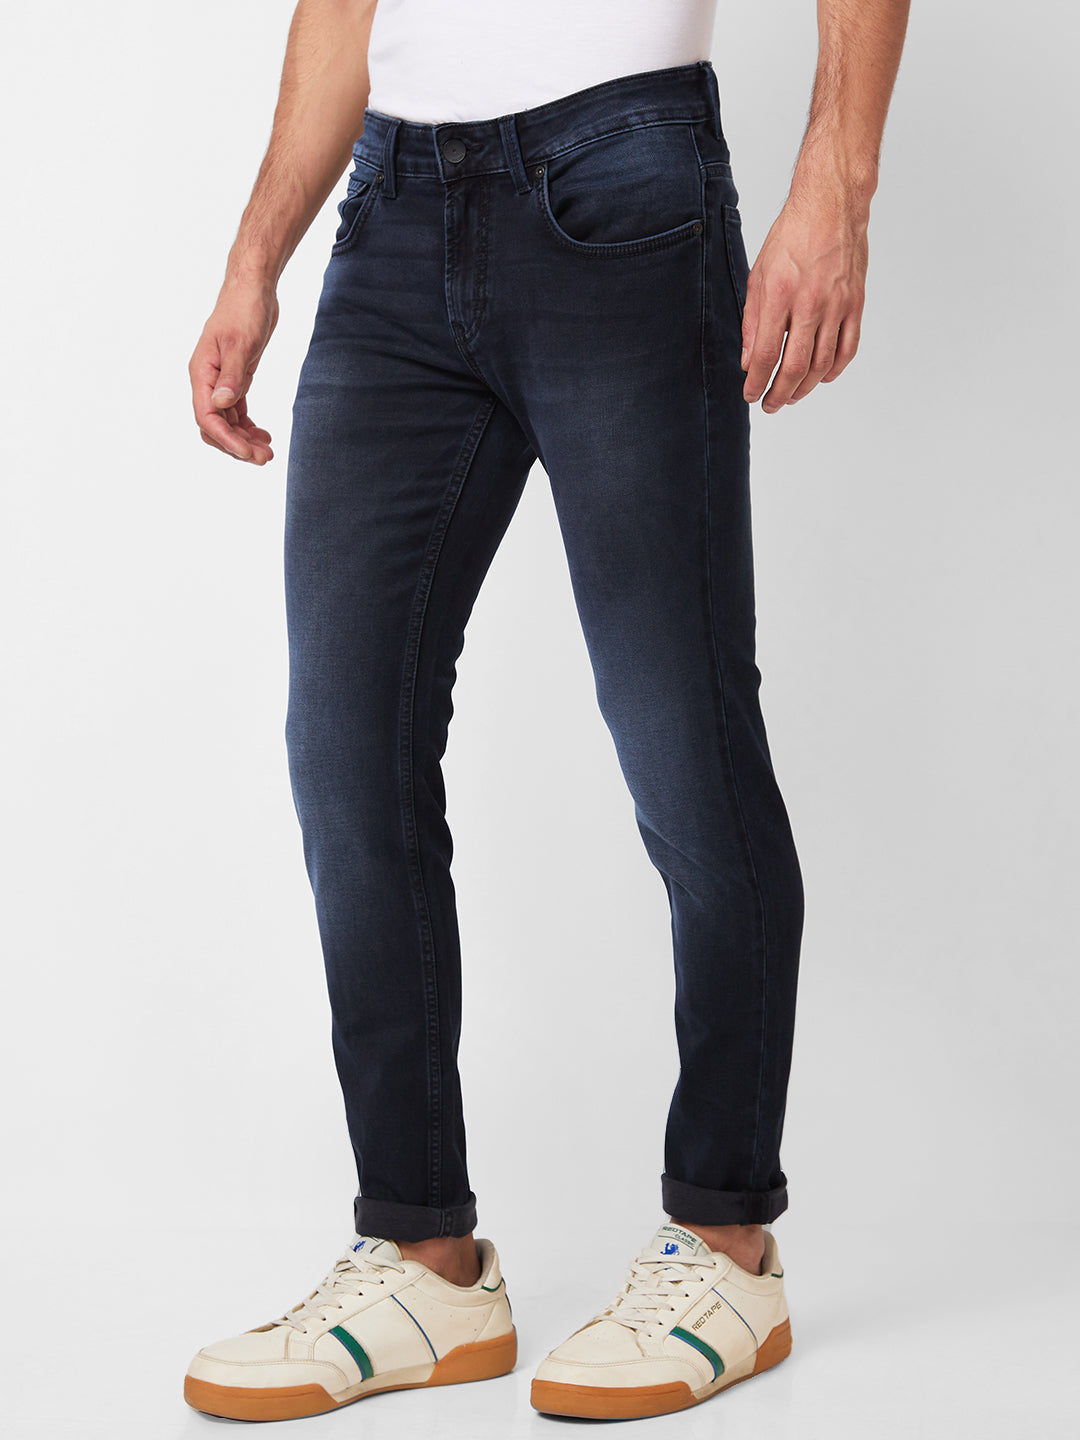 Spykar Low Rise Super Slim Fit Black Jeans For Men